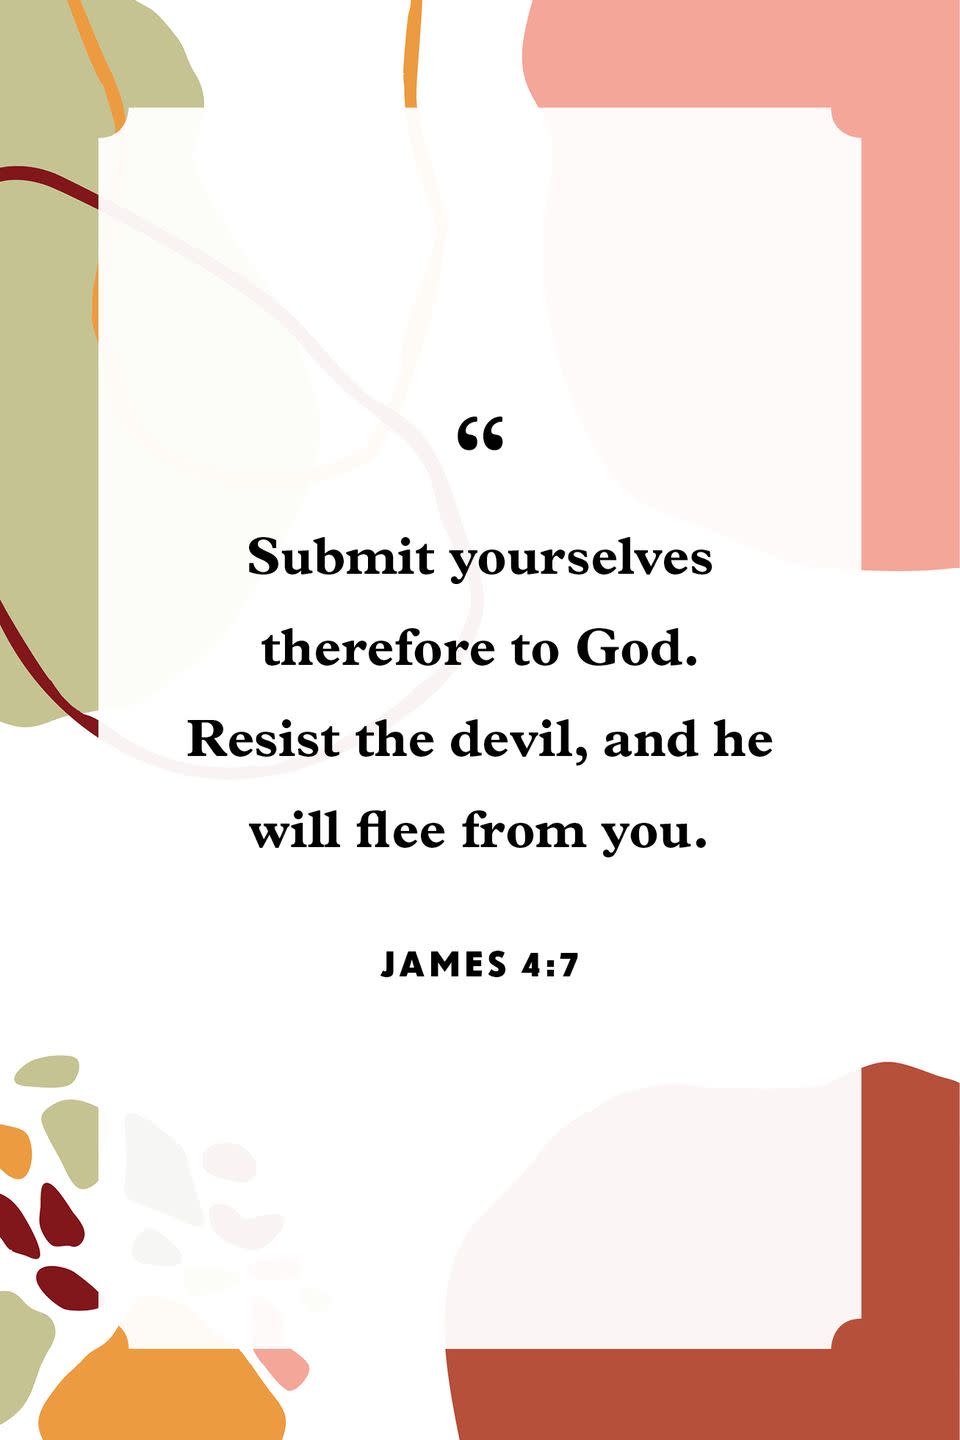 13) James 4:7